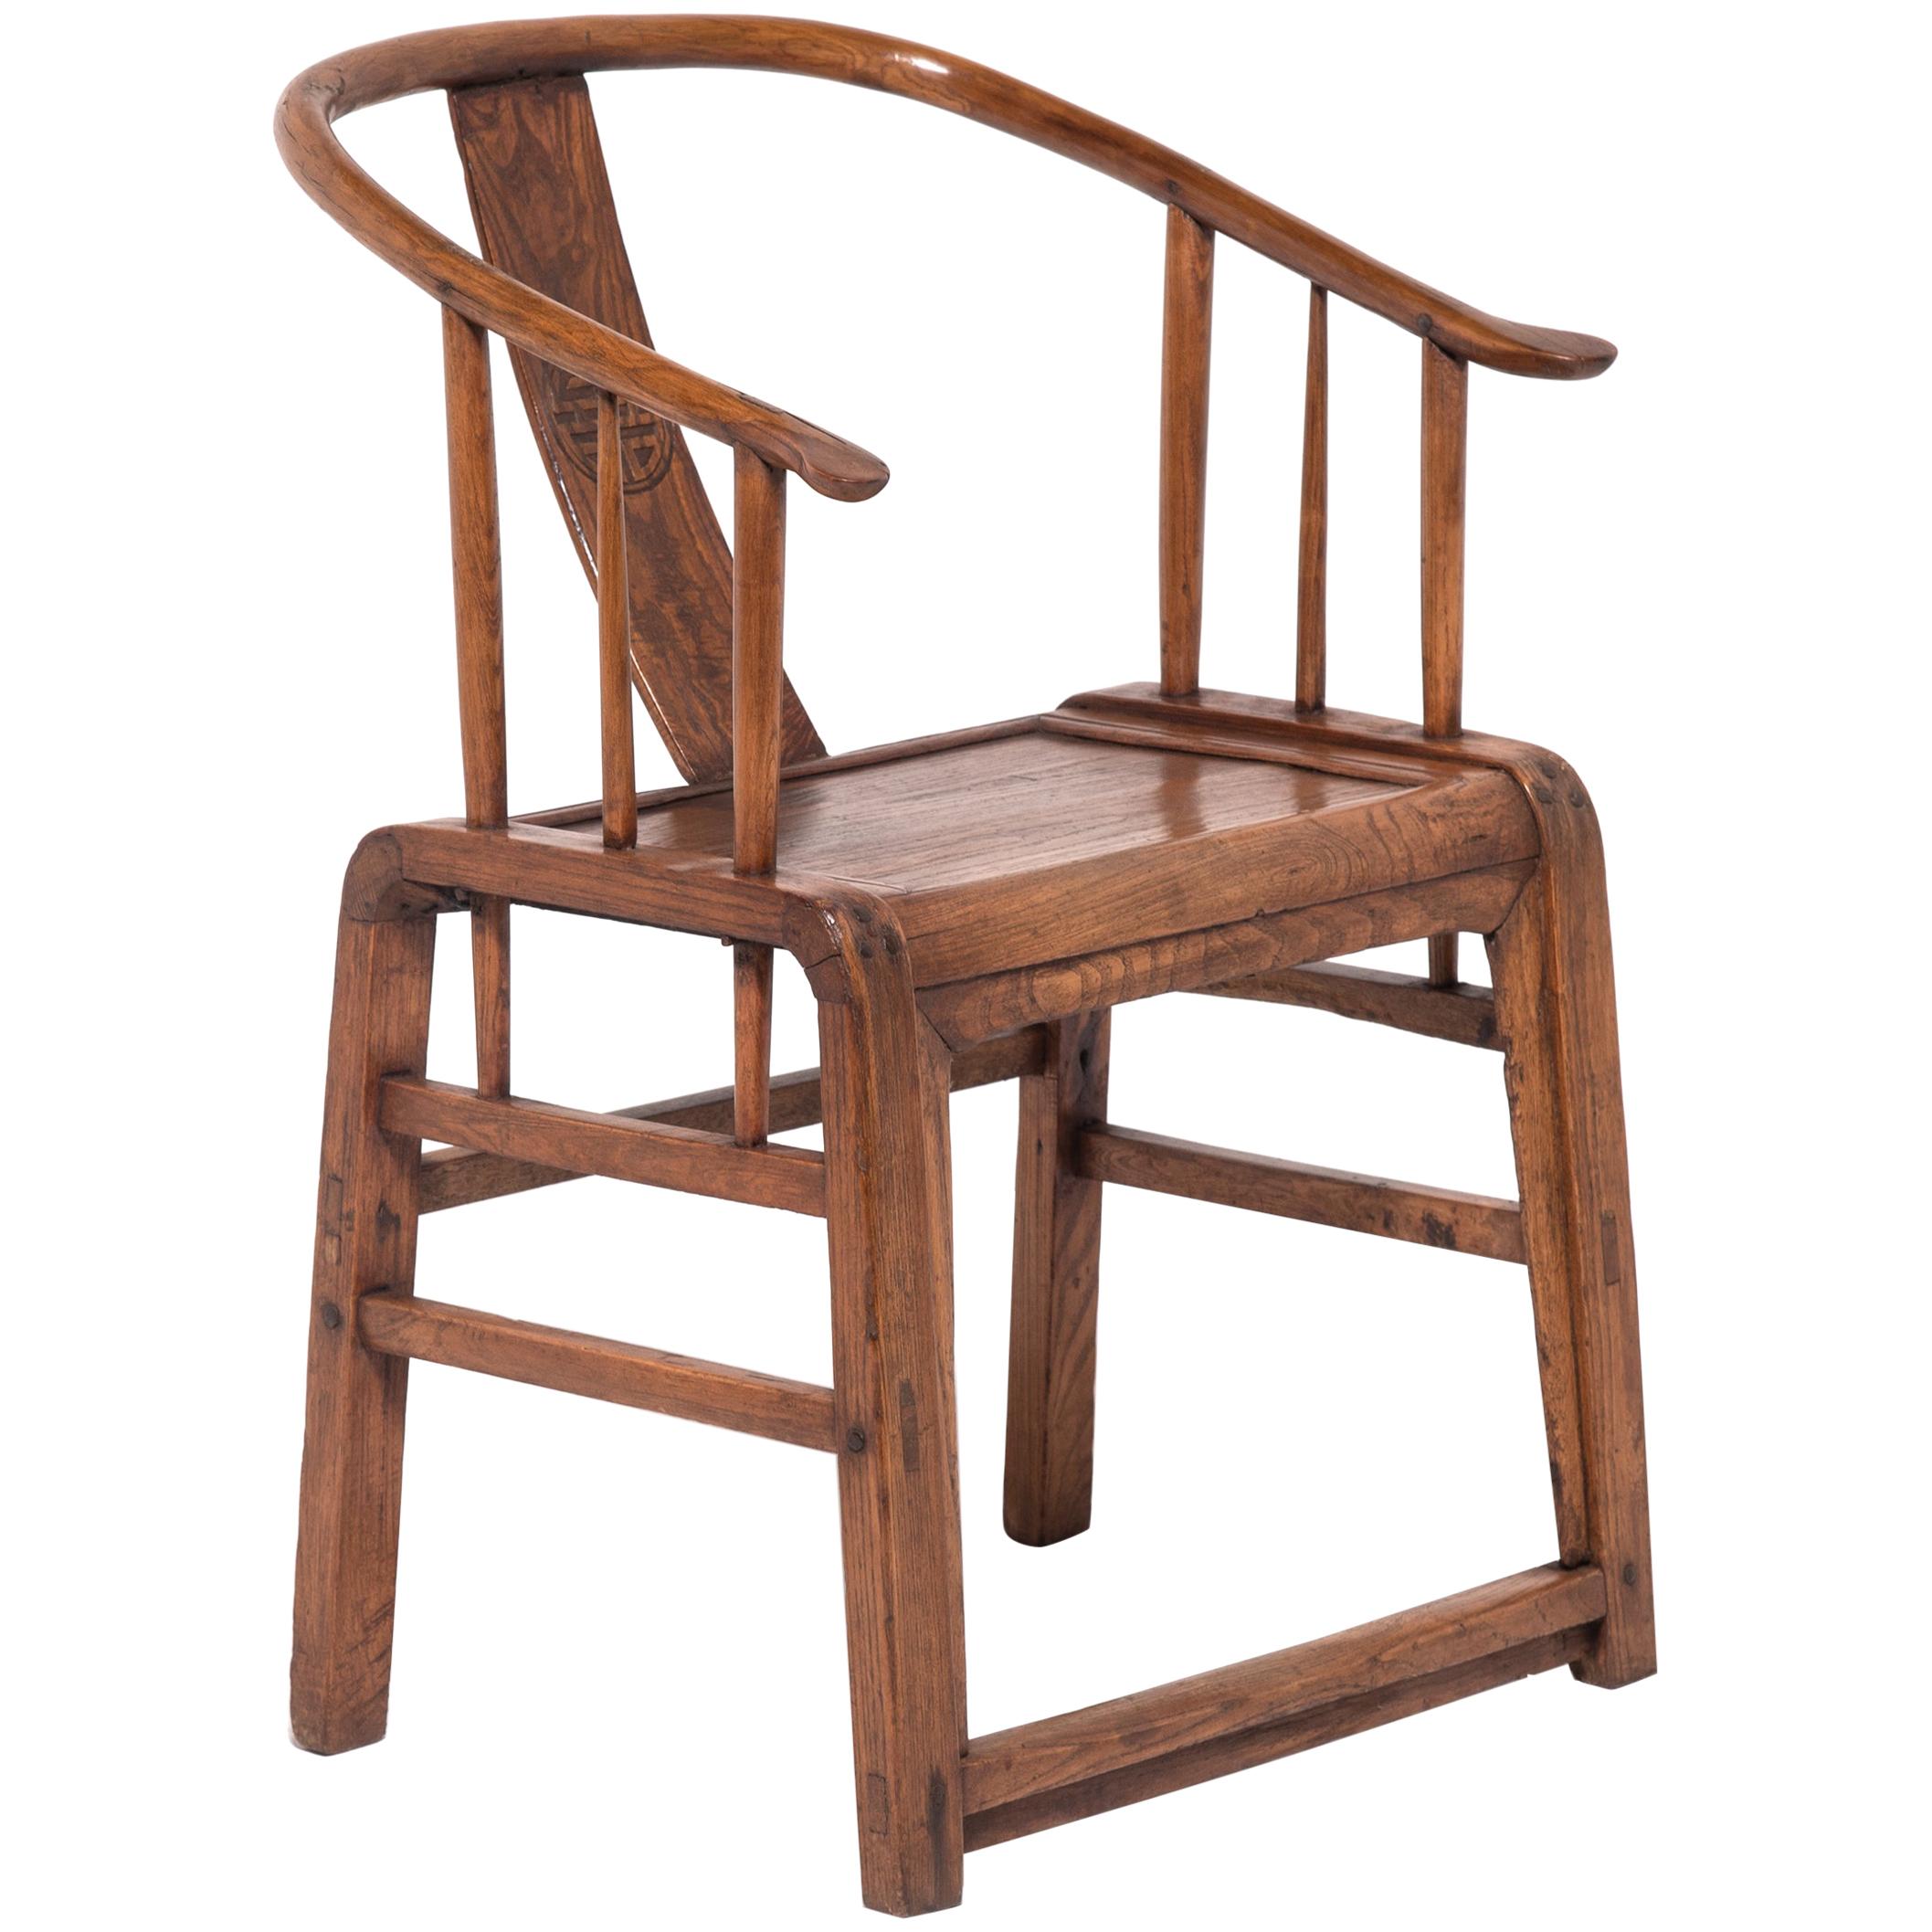 Chinese Roundback Chair, circa 1850